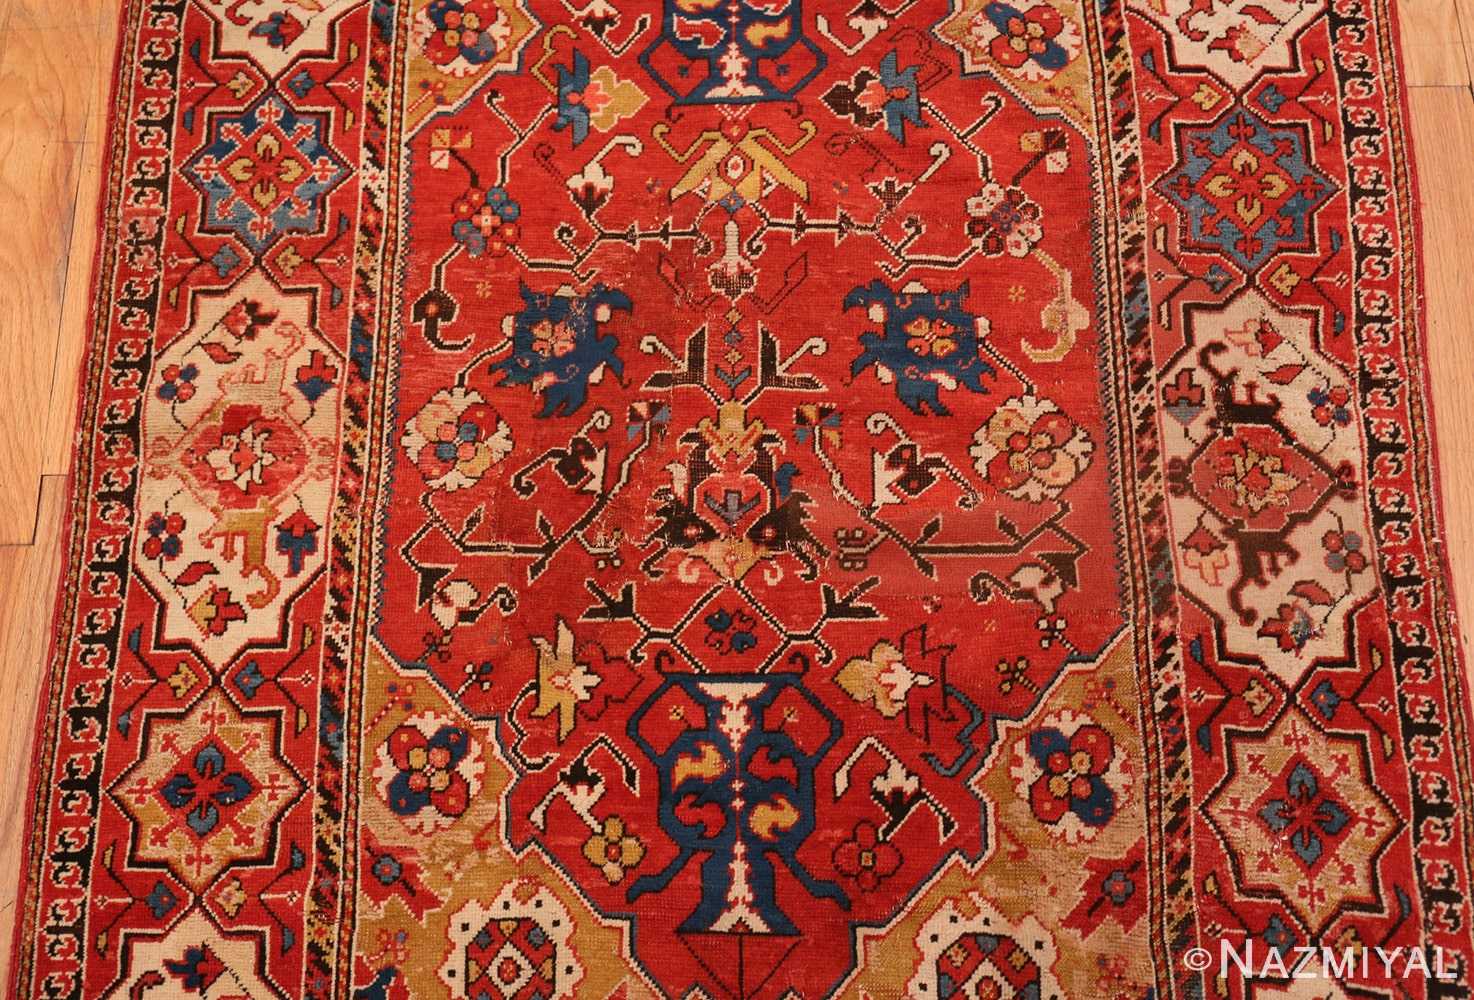 Field Antique 17th century Transylvanian Turkish rug 70178 by Nazmiyal